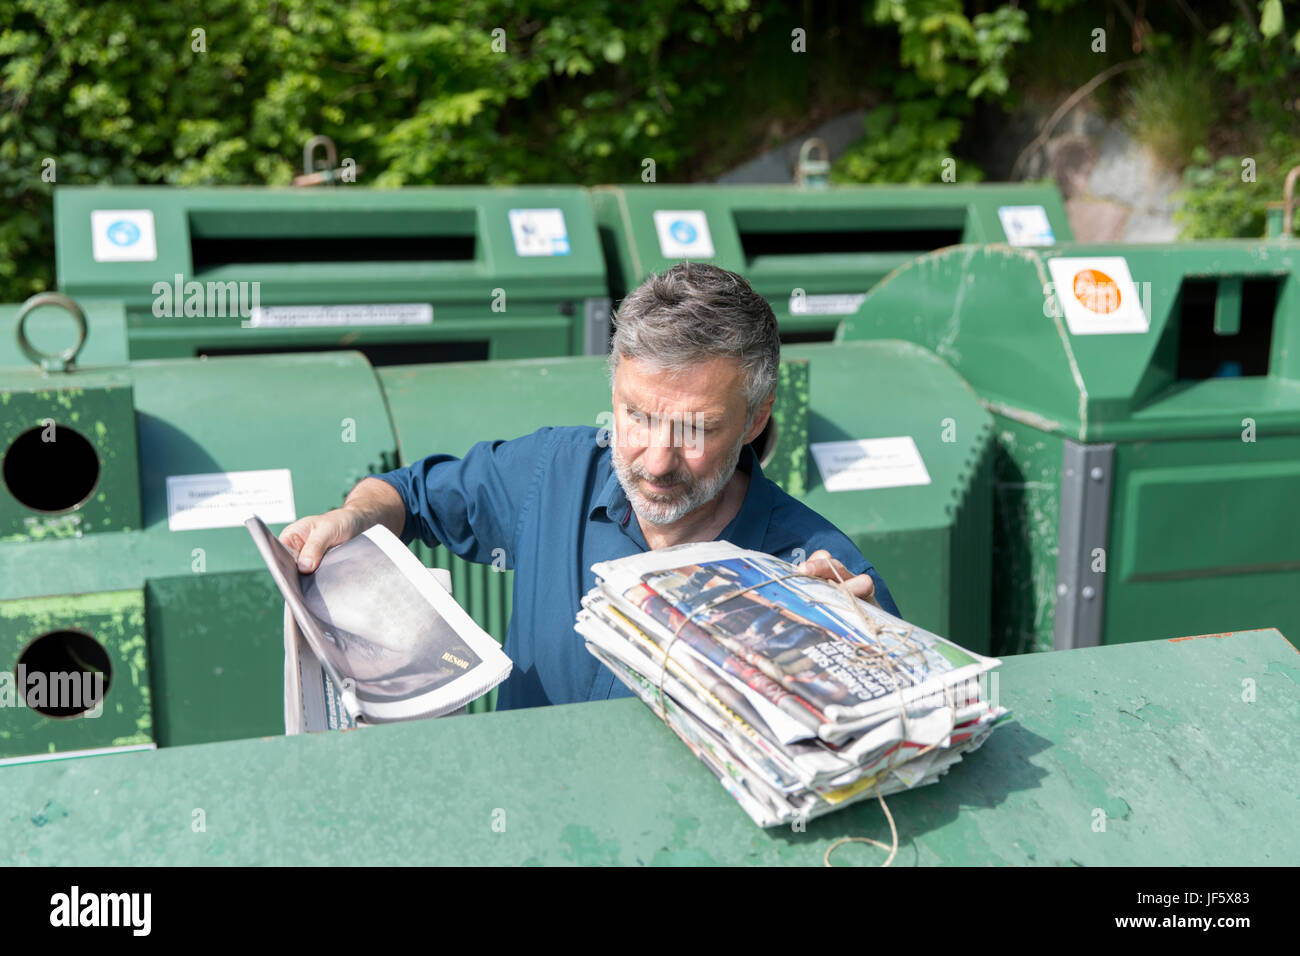 Man throwing paper into recycling bin Stock Photo